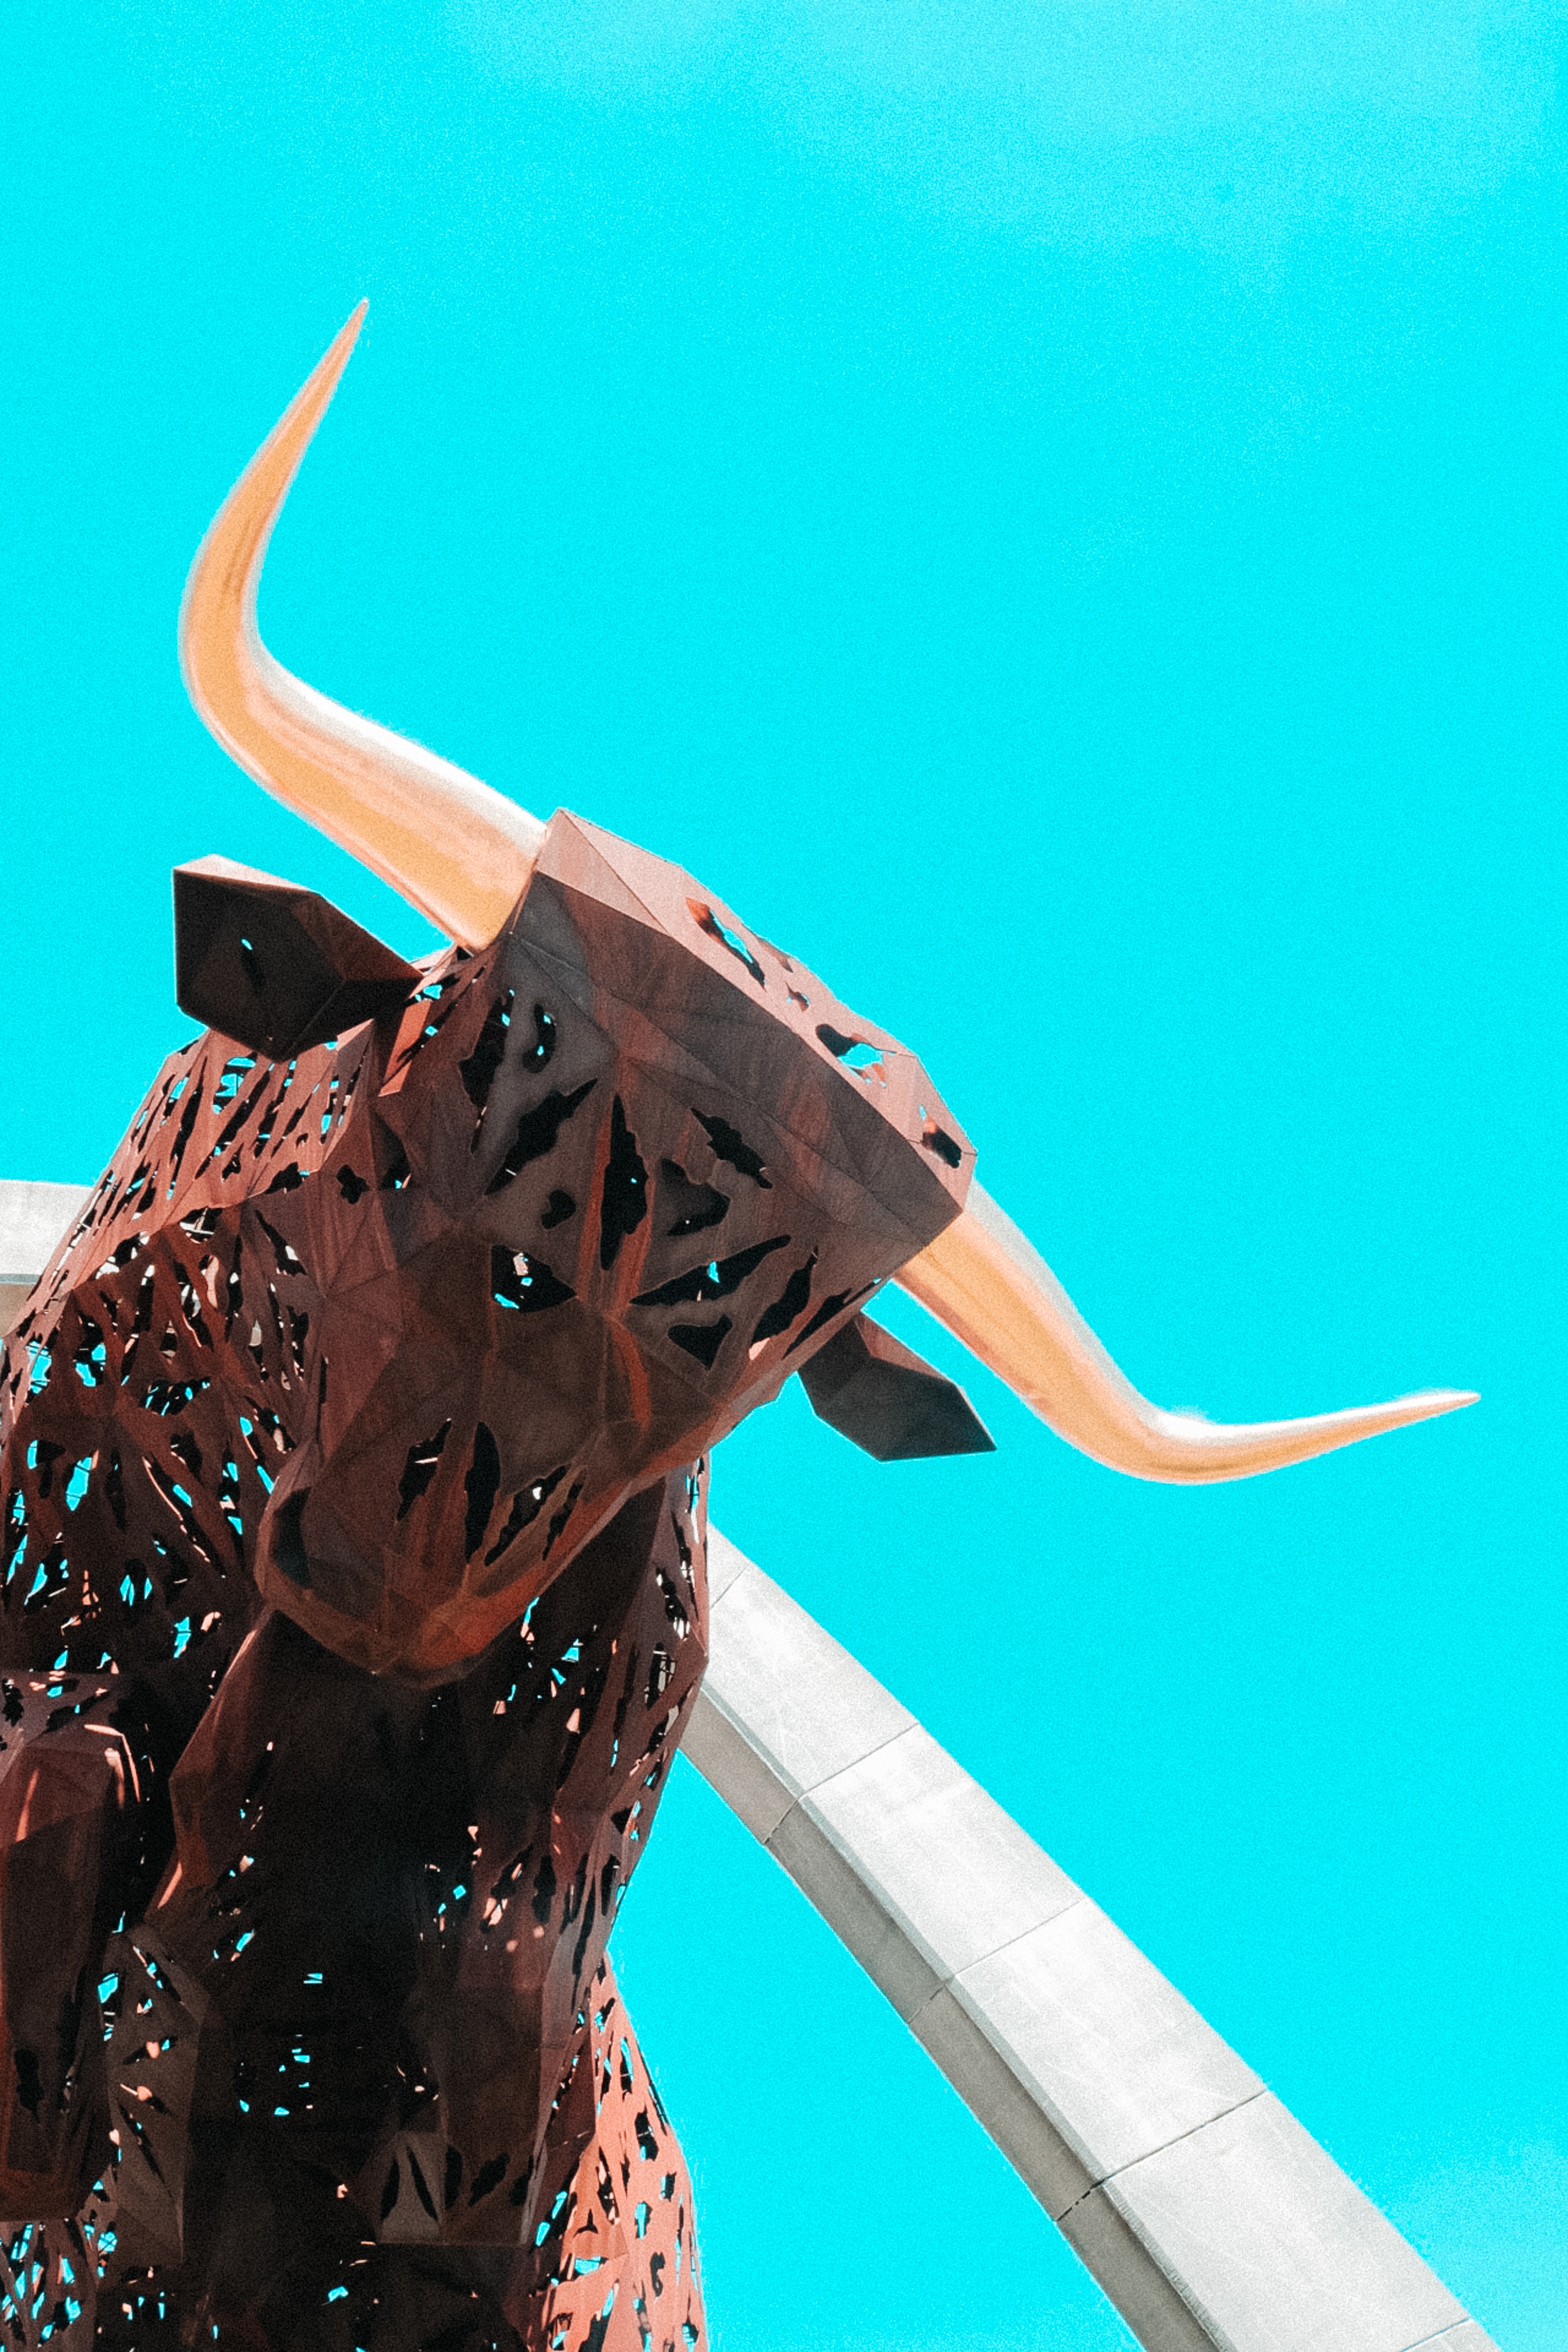 A  bull. | Source: Unsplash